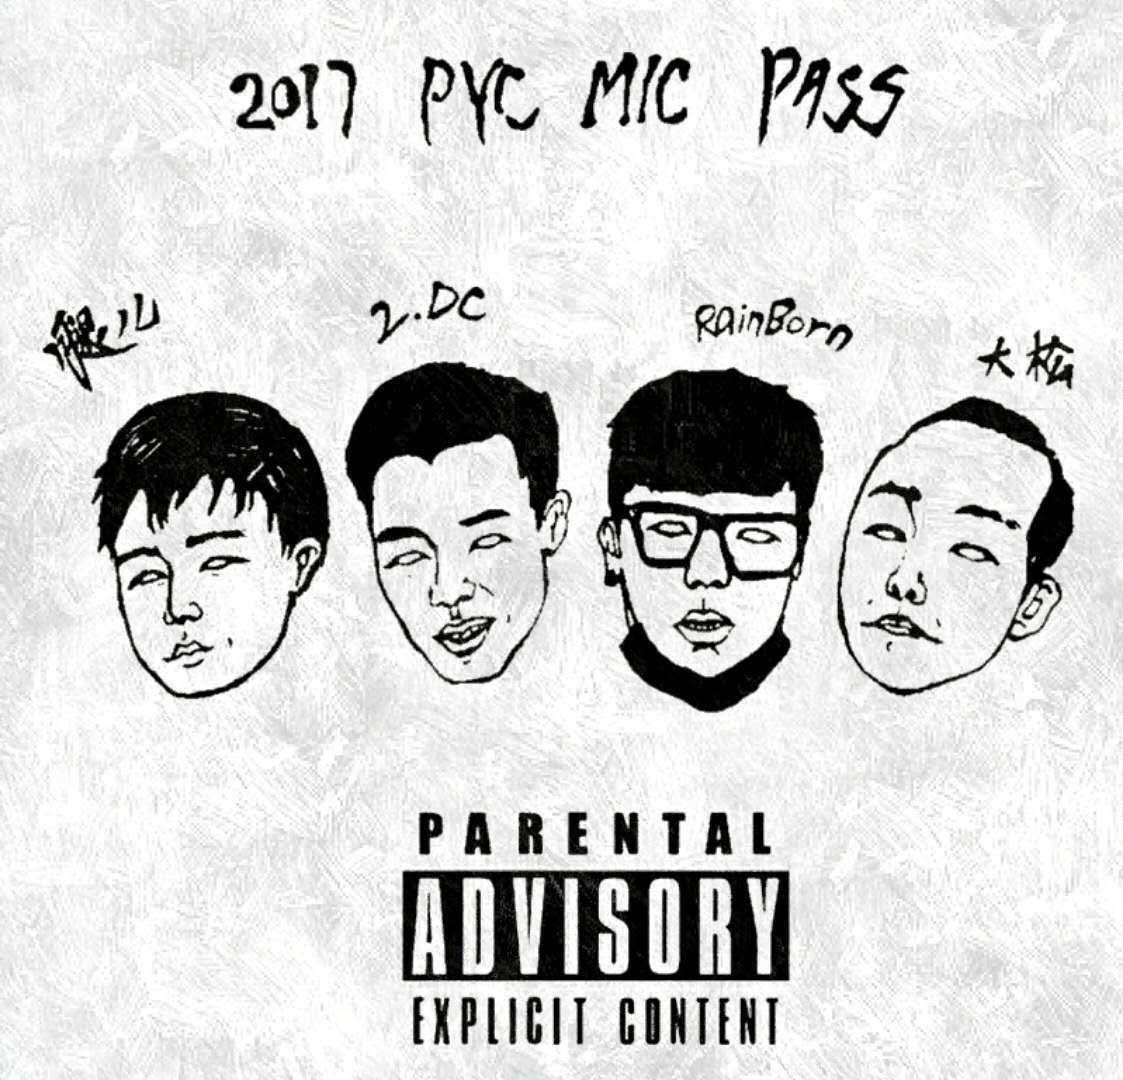 2017 PYC MIC PASS